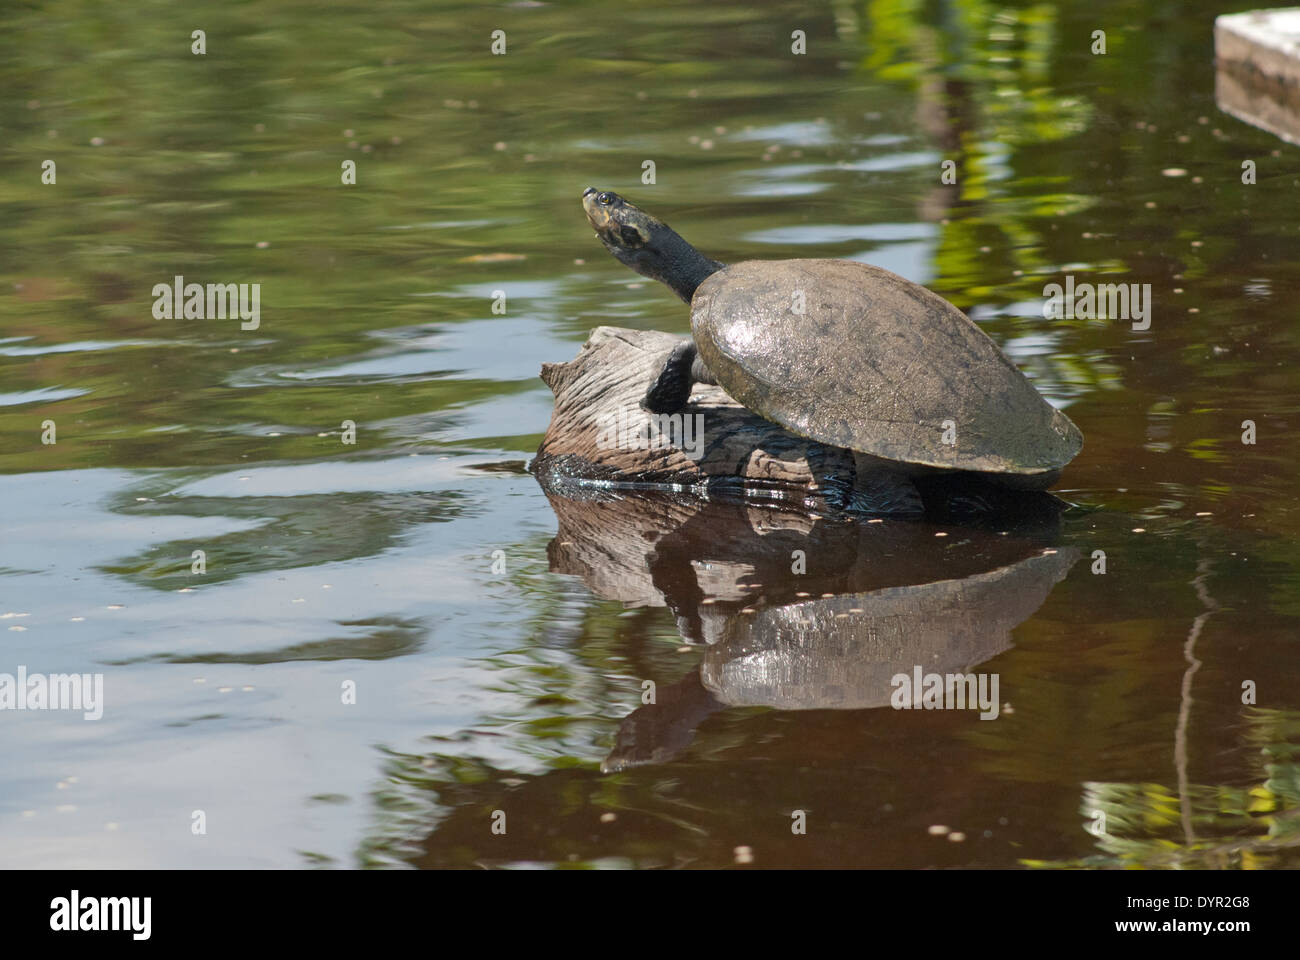 Giant river turtle (Podocnemis expansa) Stock Photo